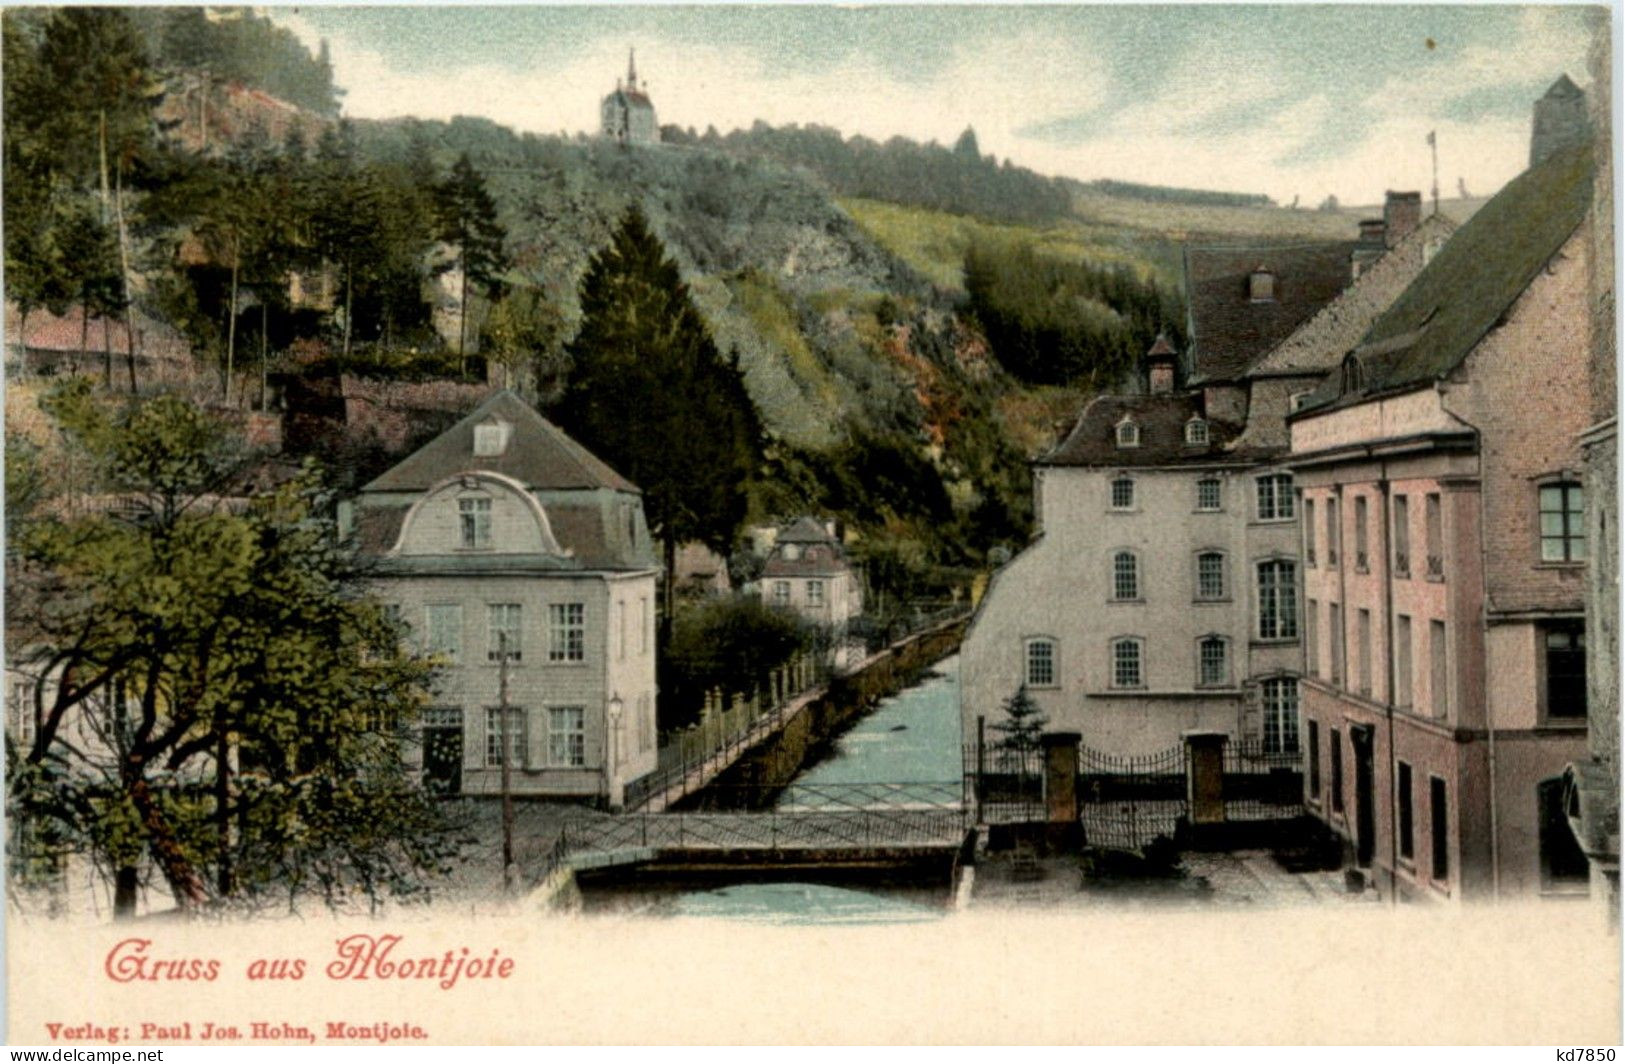 Montjoie - Monschau